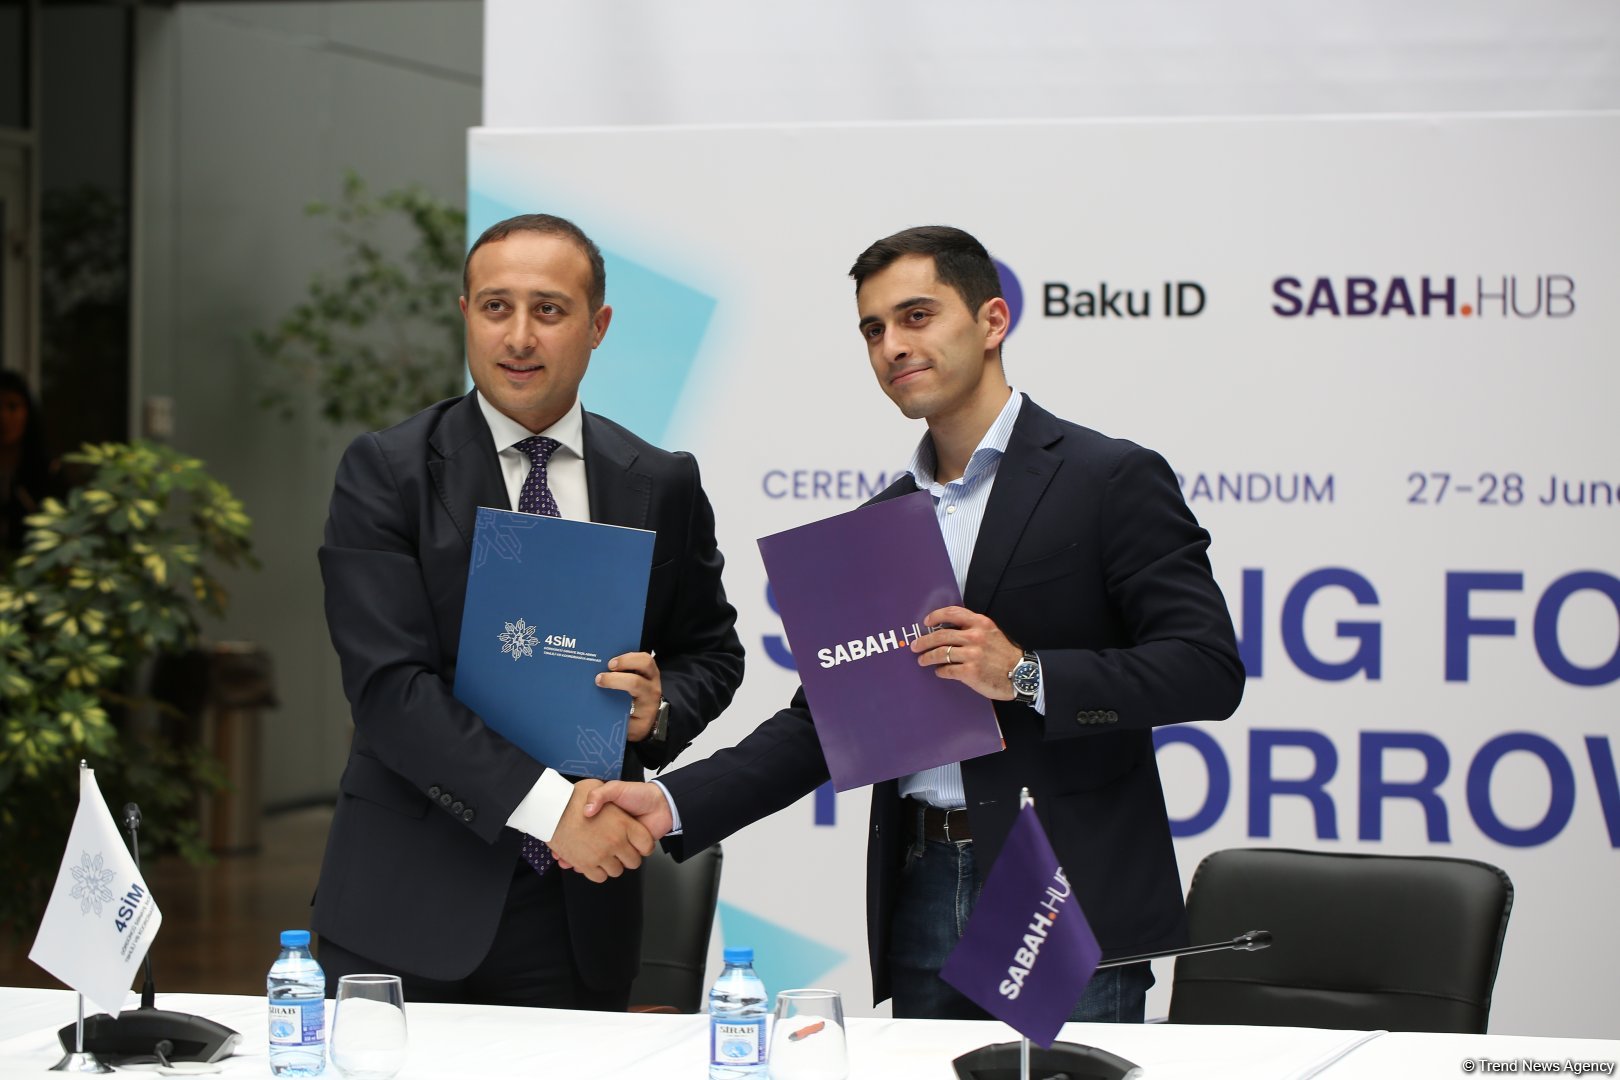 Azerbaijani 4SIM and SABAH.HUB sign memorandum of understanding